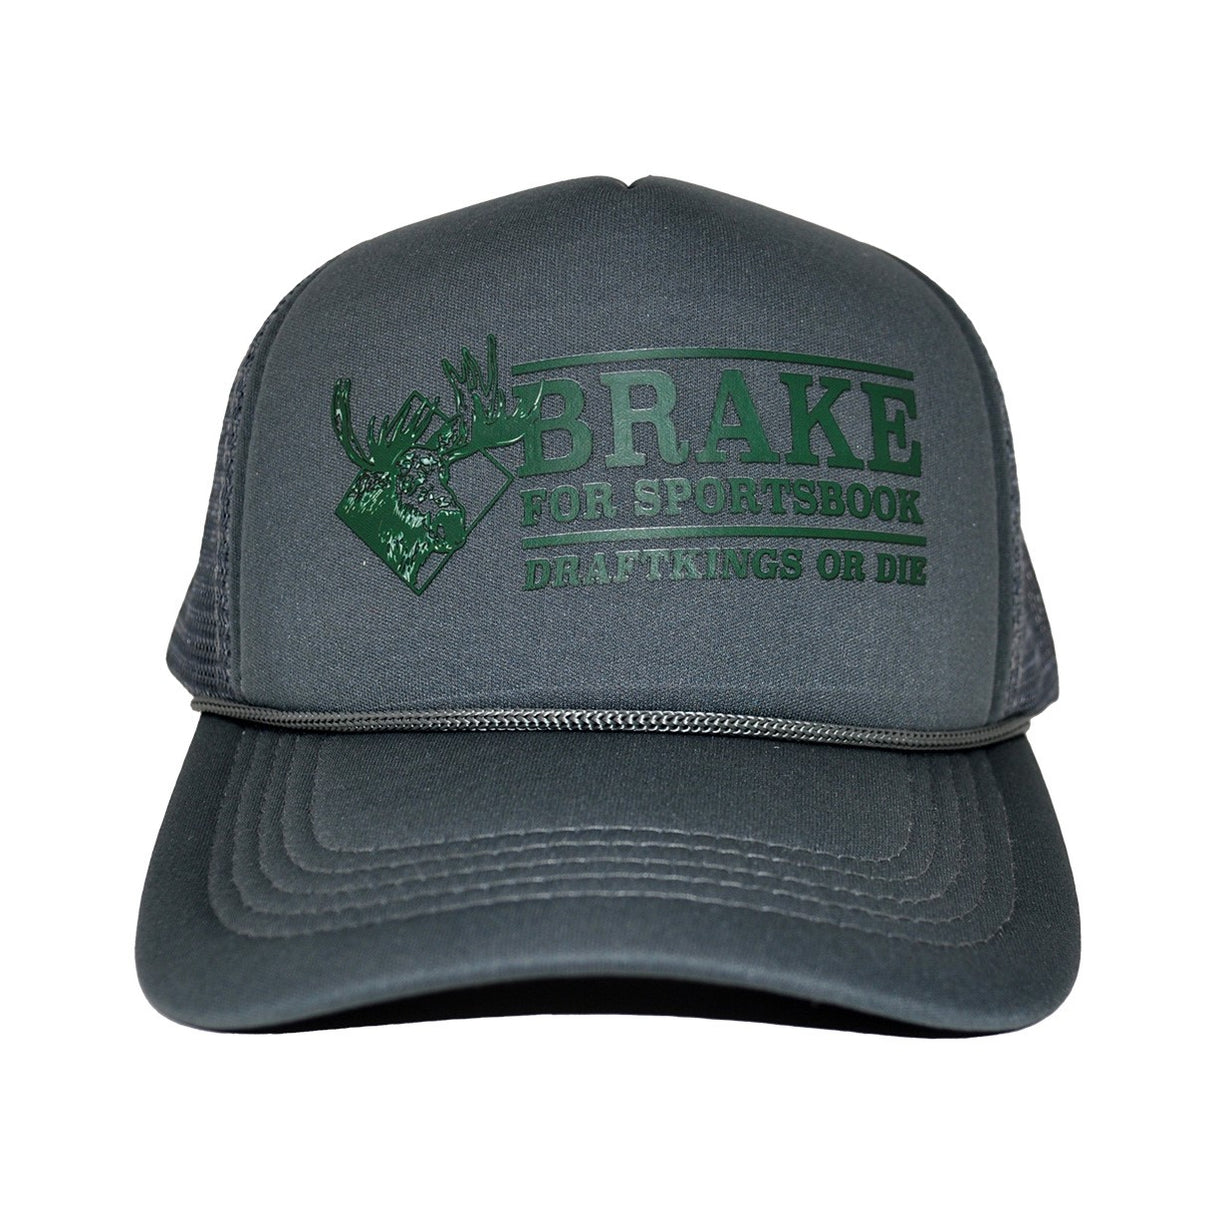 DraftKings New Hampshire Sportsbook Trucker Hat